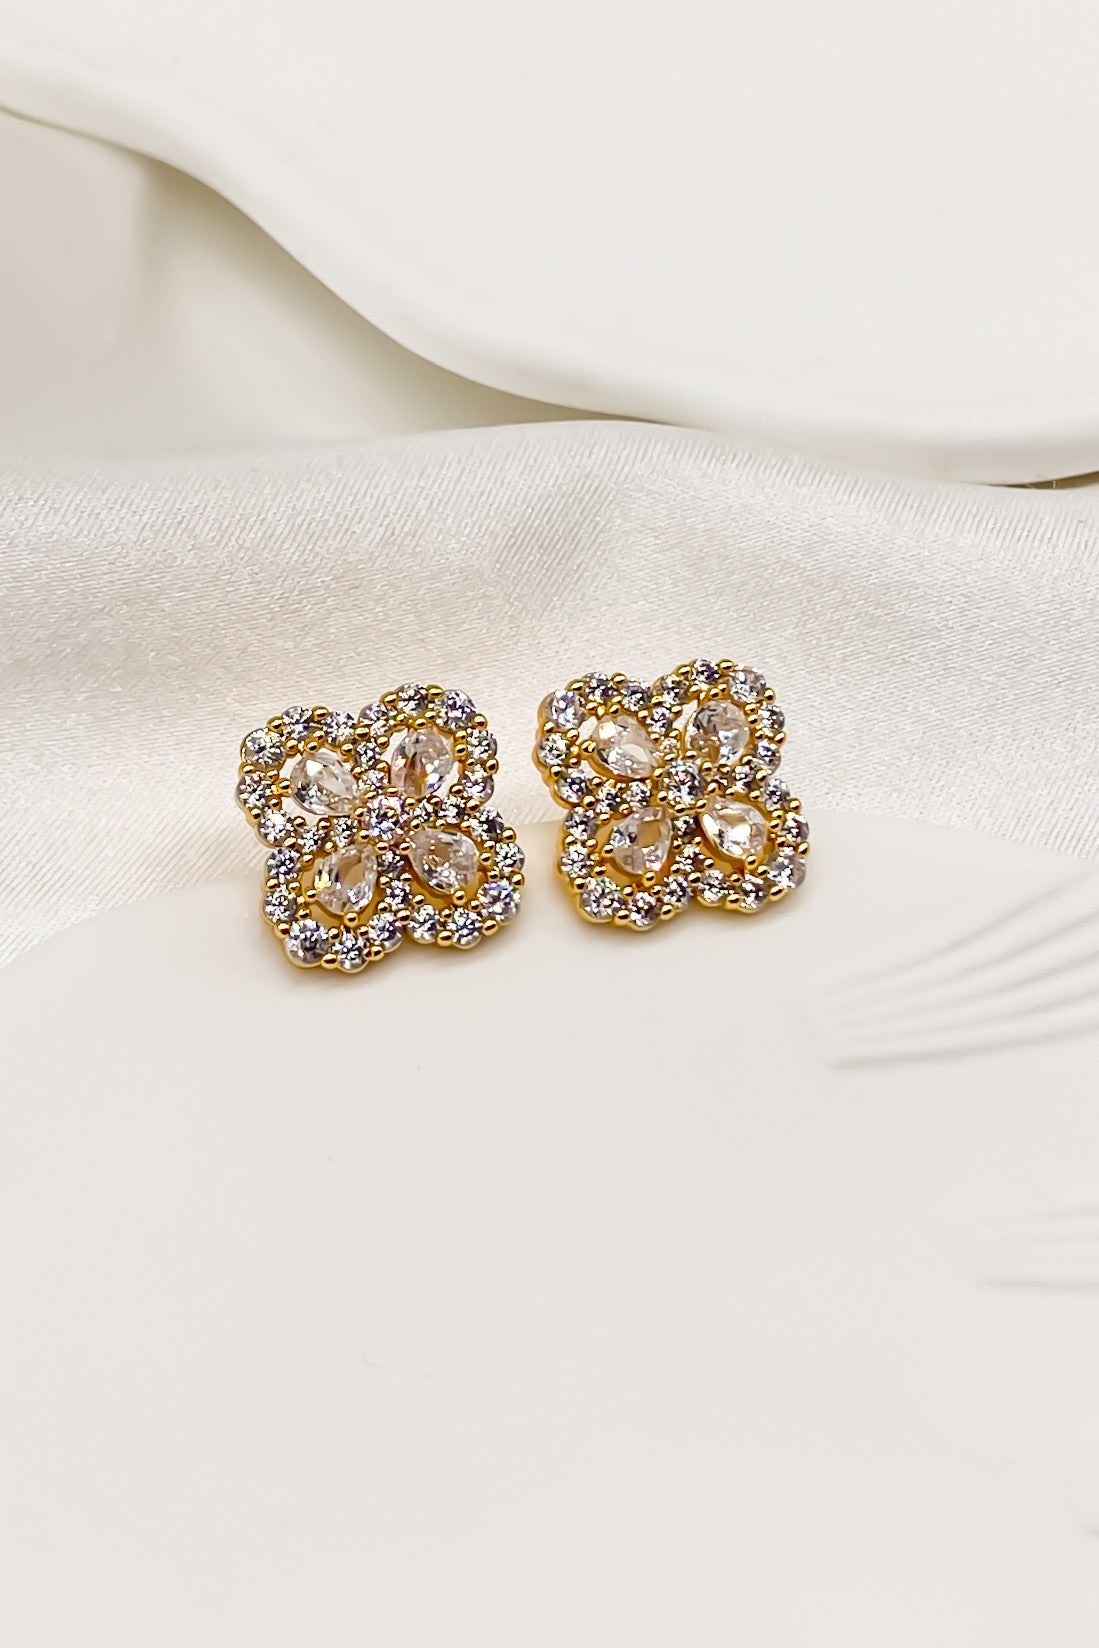 SKYE Shop Chic Modern Elegant Classy Women Jewelry French Parisian Minimalist Tilly Crystal Clover Earrings 5